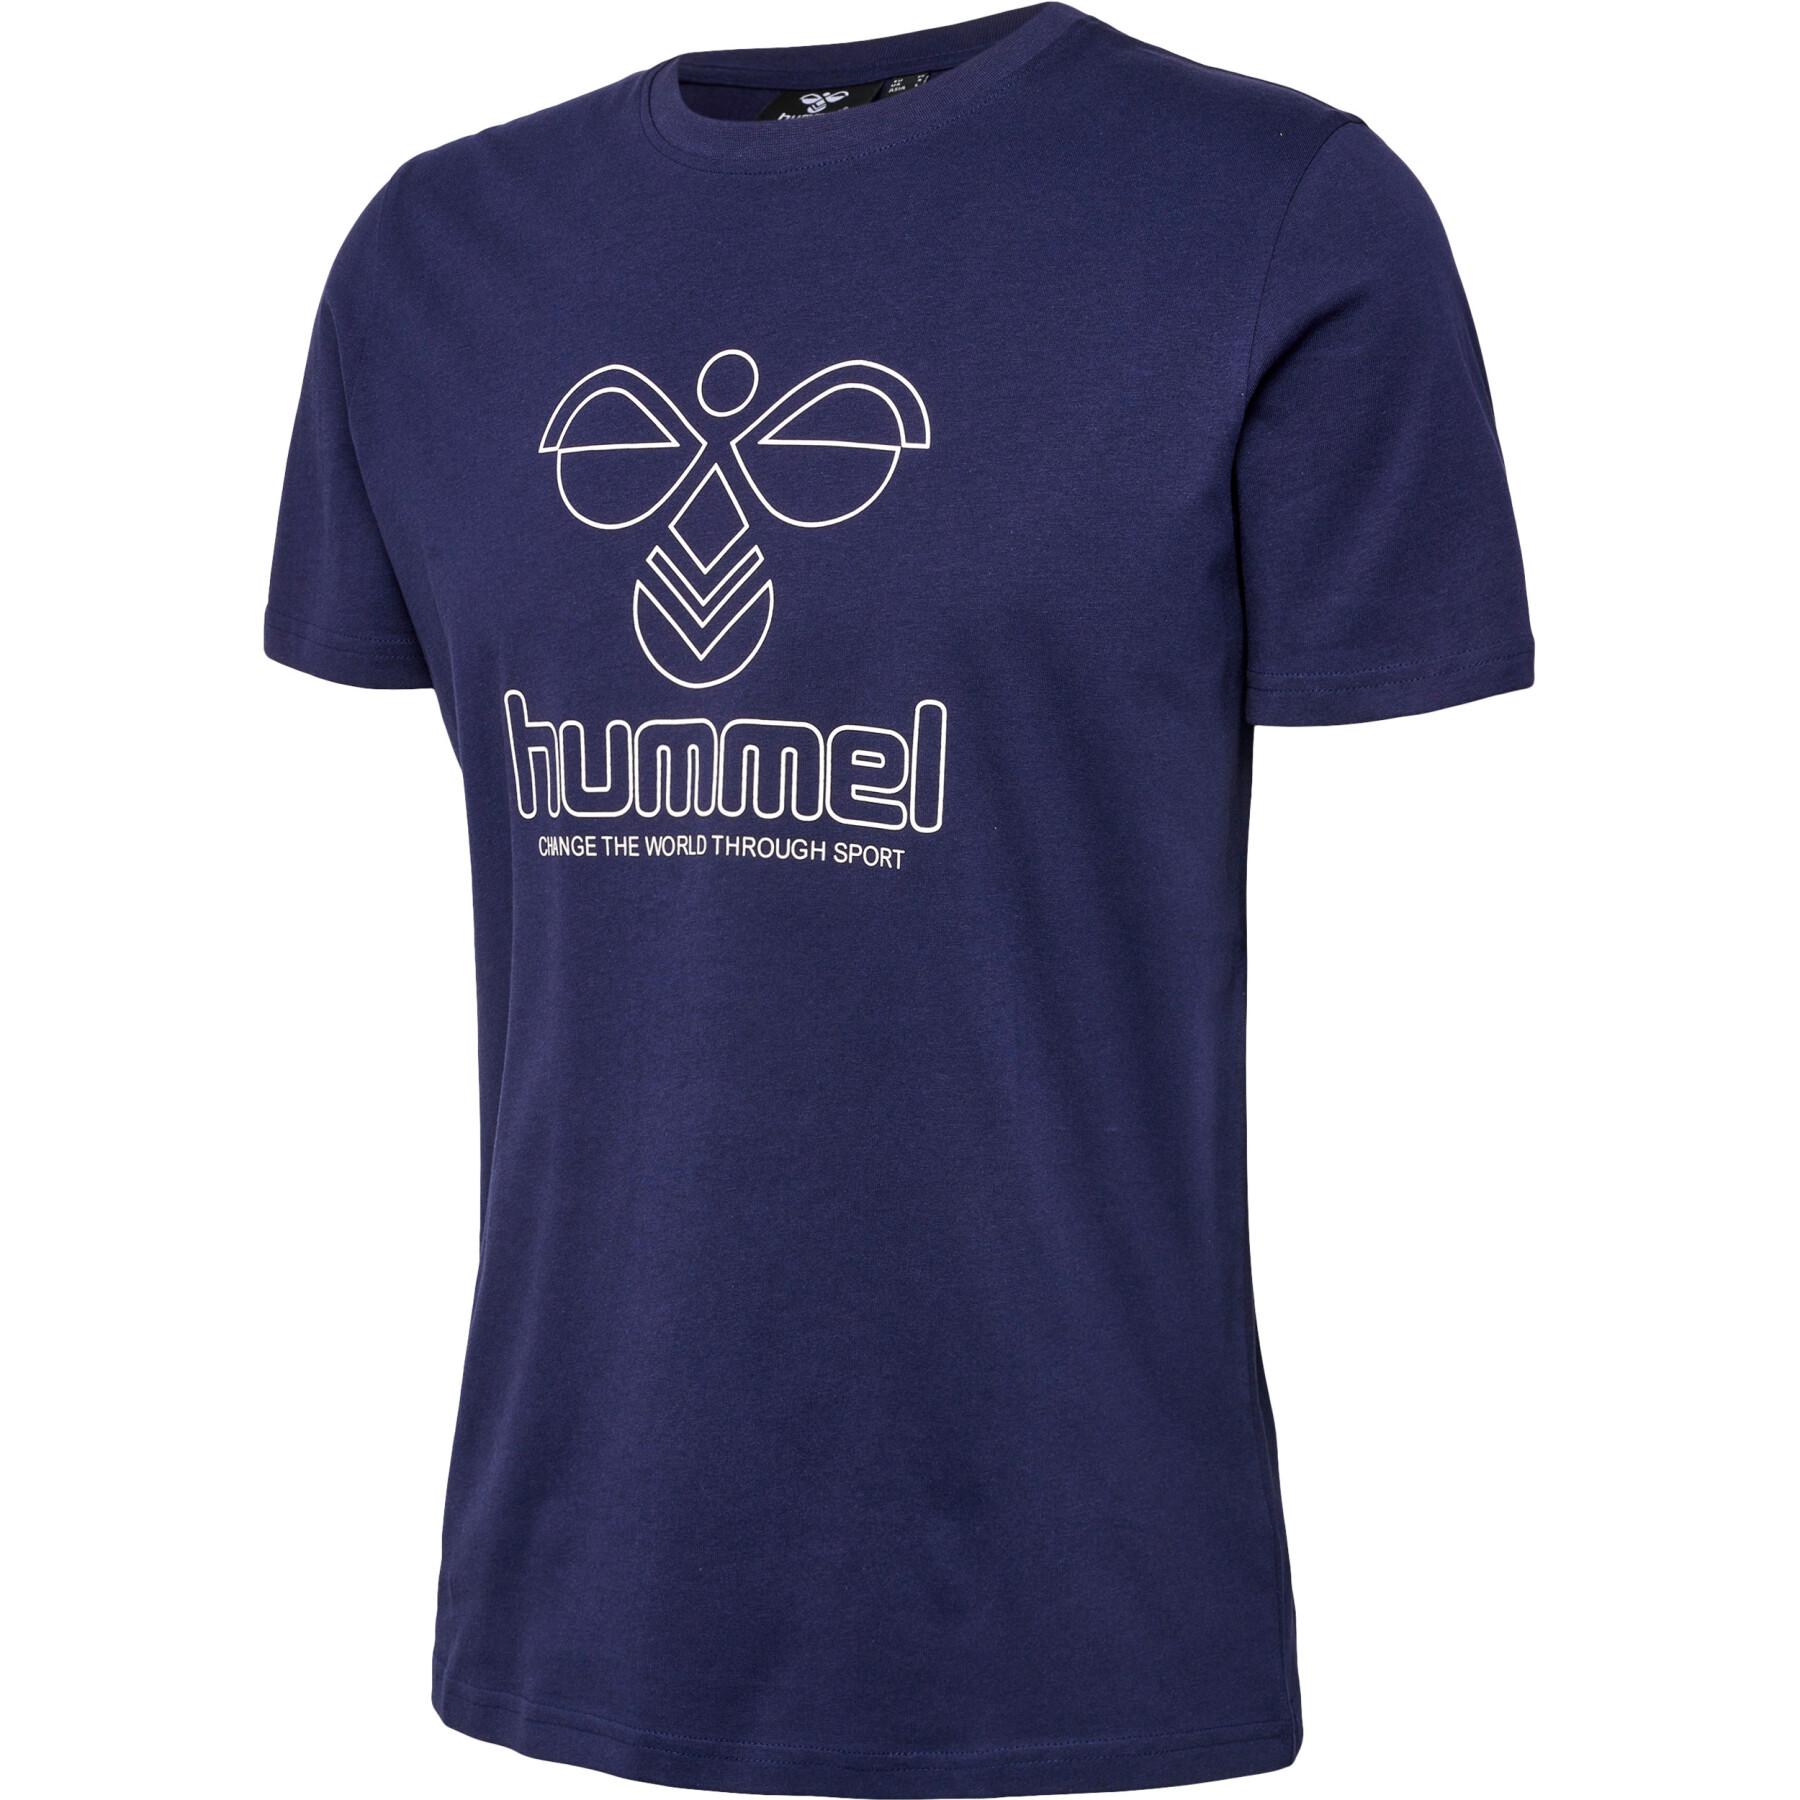 T-shirt Hummel Icons